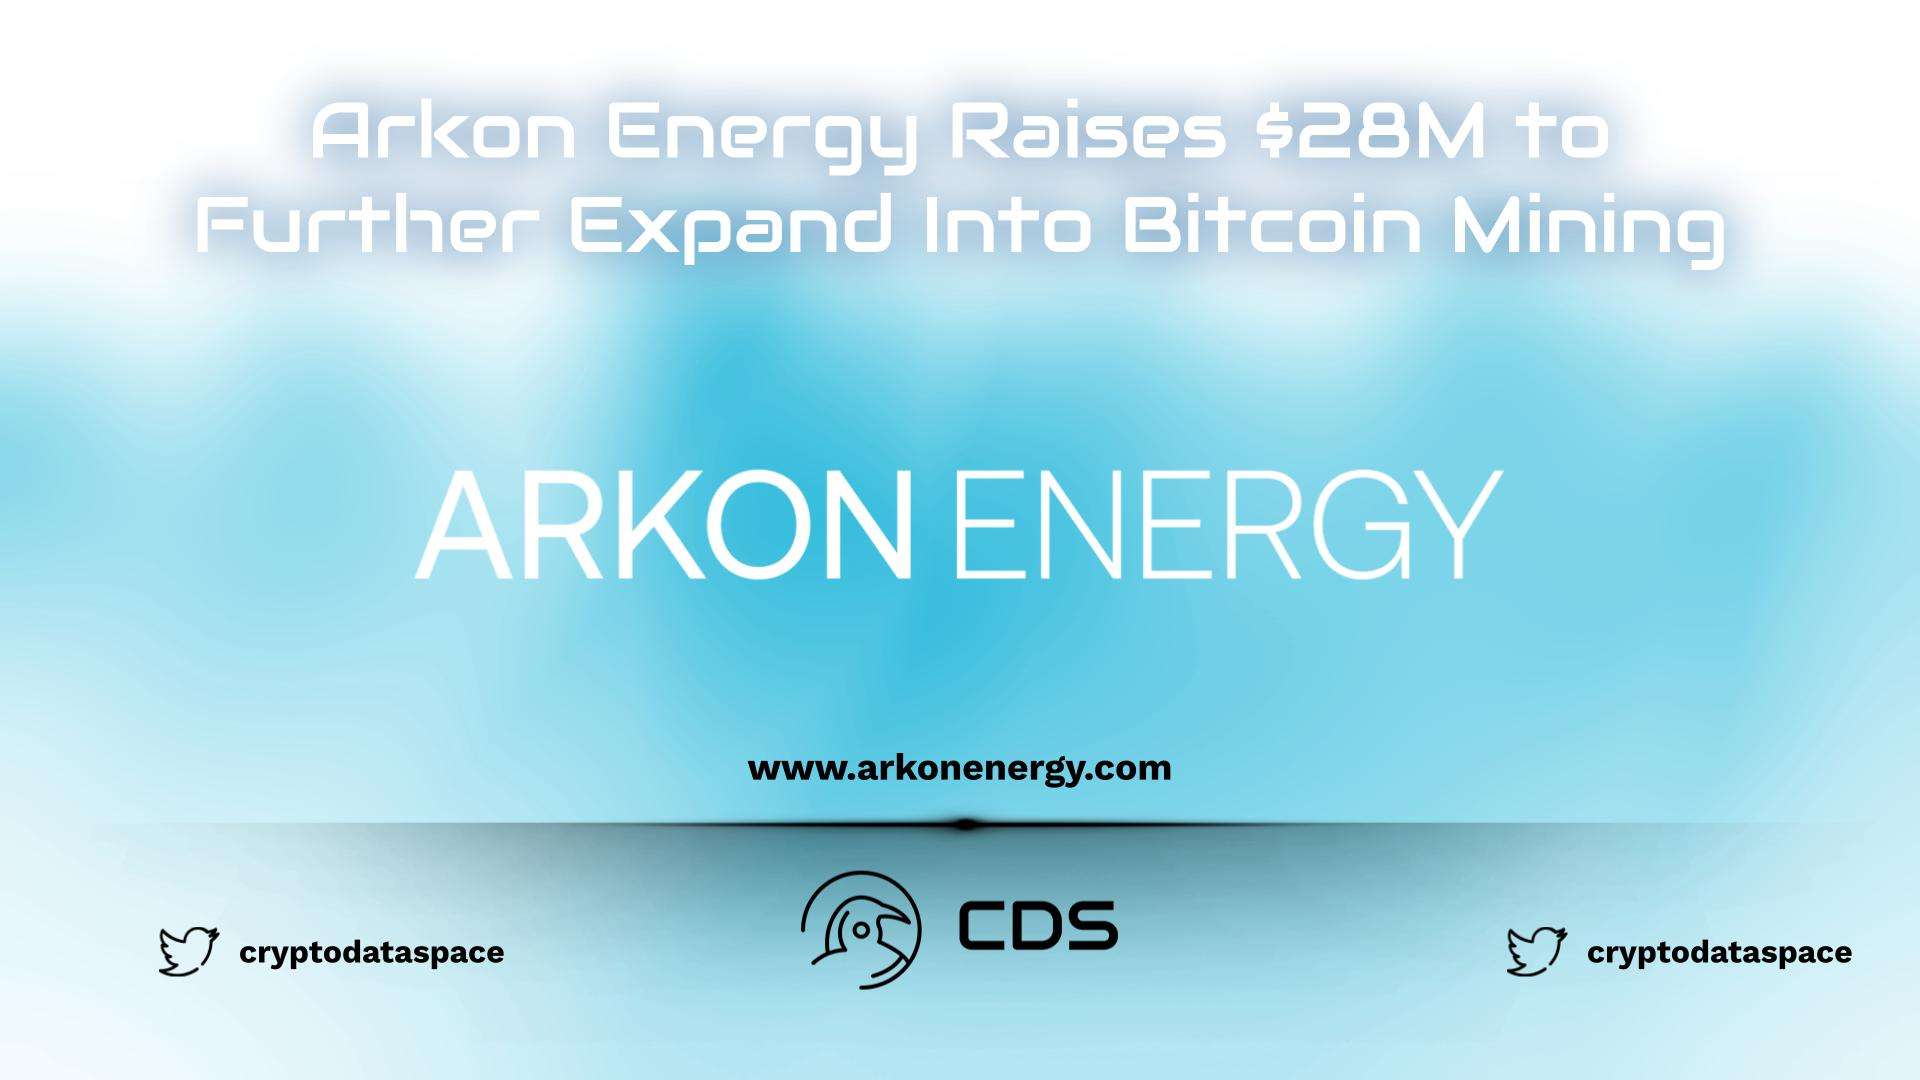 Arkon Energy Raises $28M to Further Expand Into Bitcoin Mining